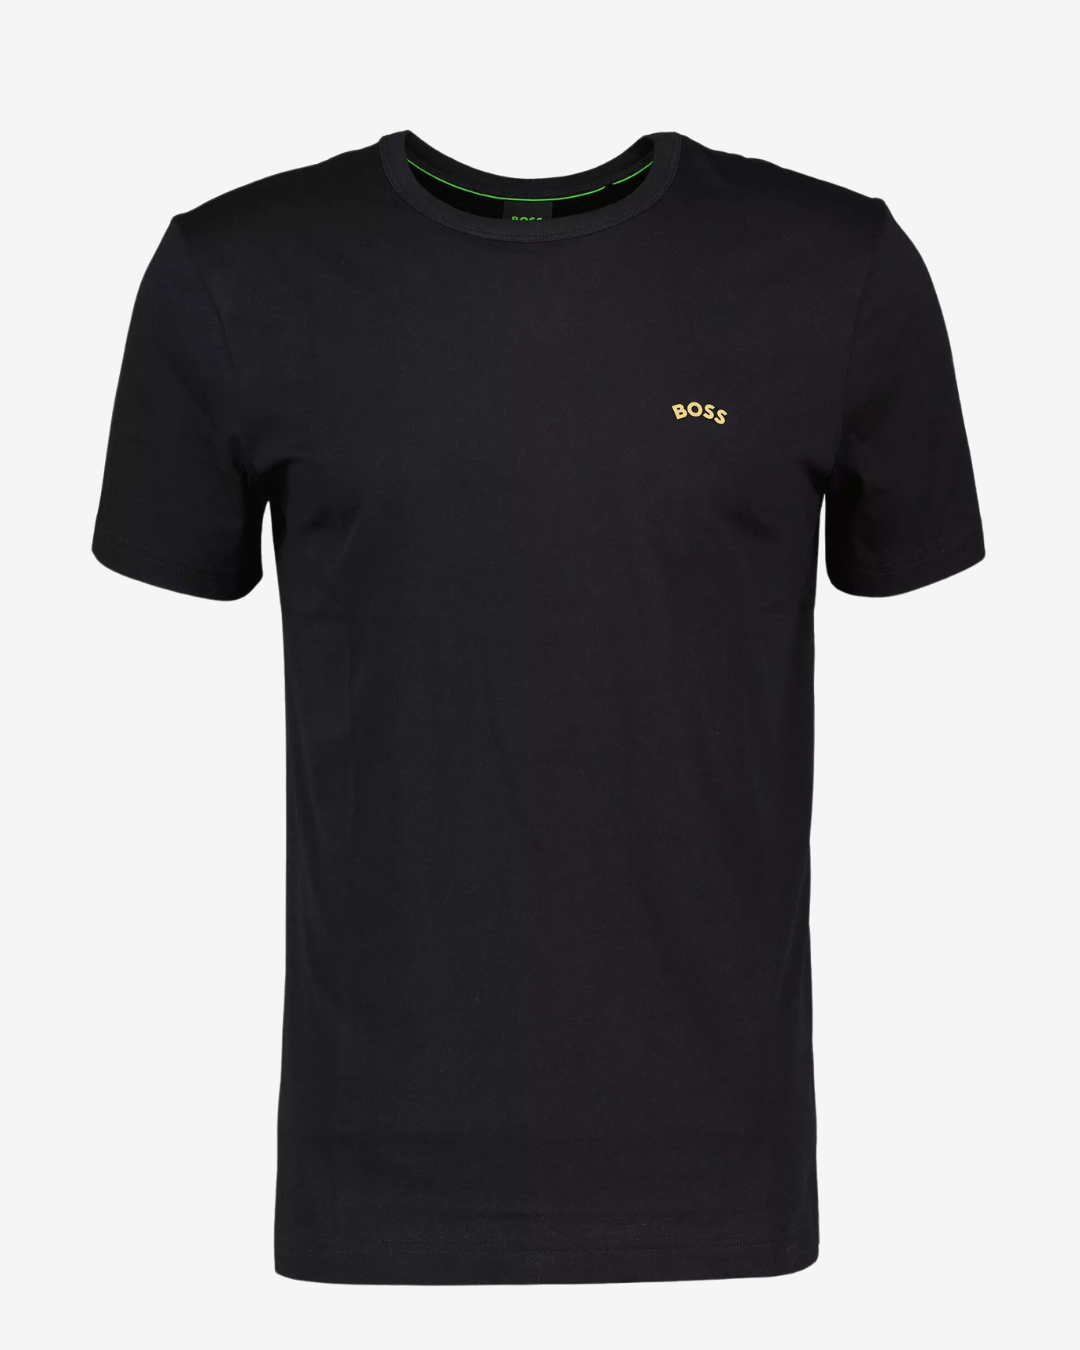 Se Hugo Boss Curved logo t-shirt - Sort / Guld - Str. L - Modish.dk hos Modish.dk